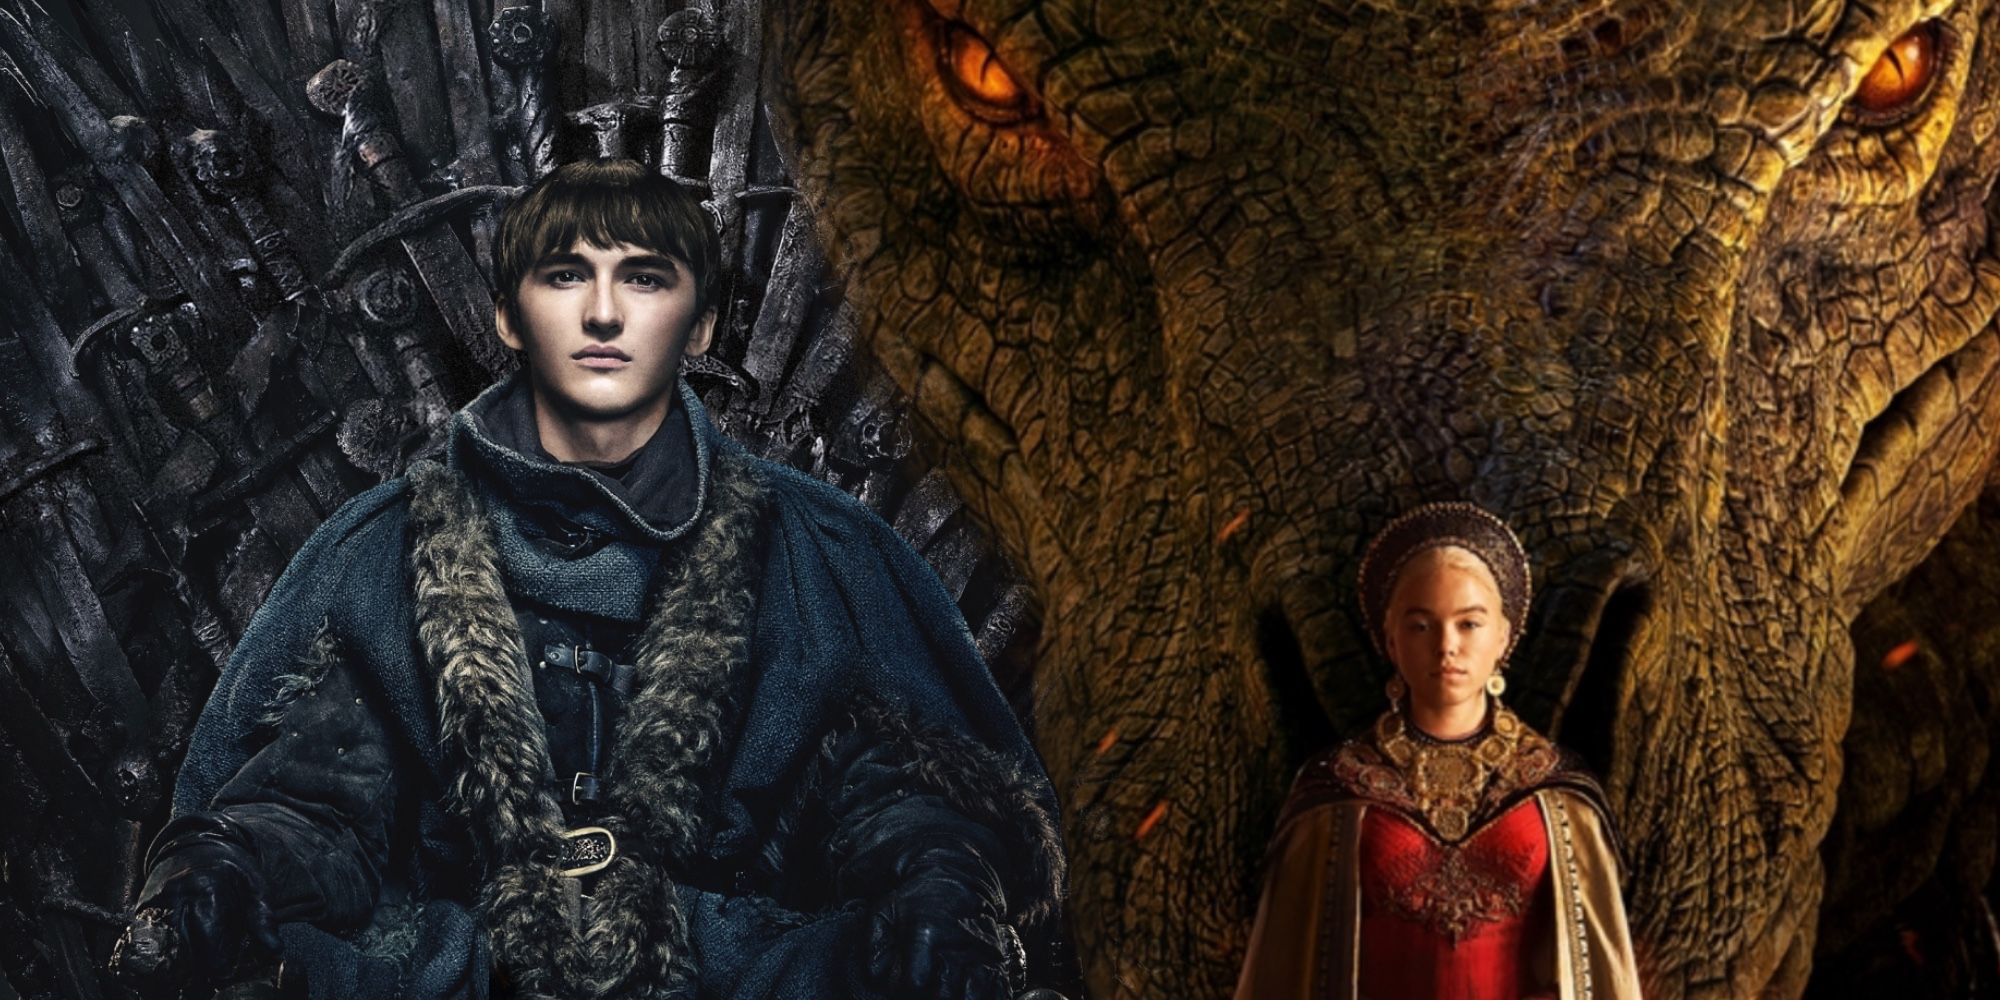 GOT's Bran Stark & HOTD's Rhaenyra Targaryen with Dragon